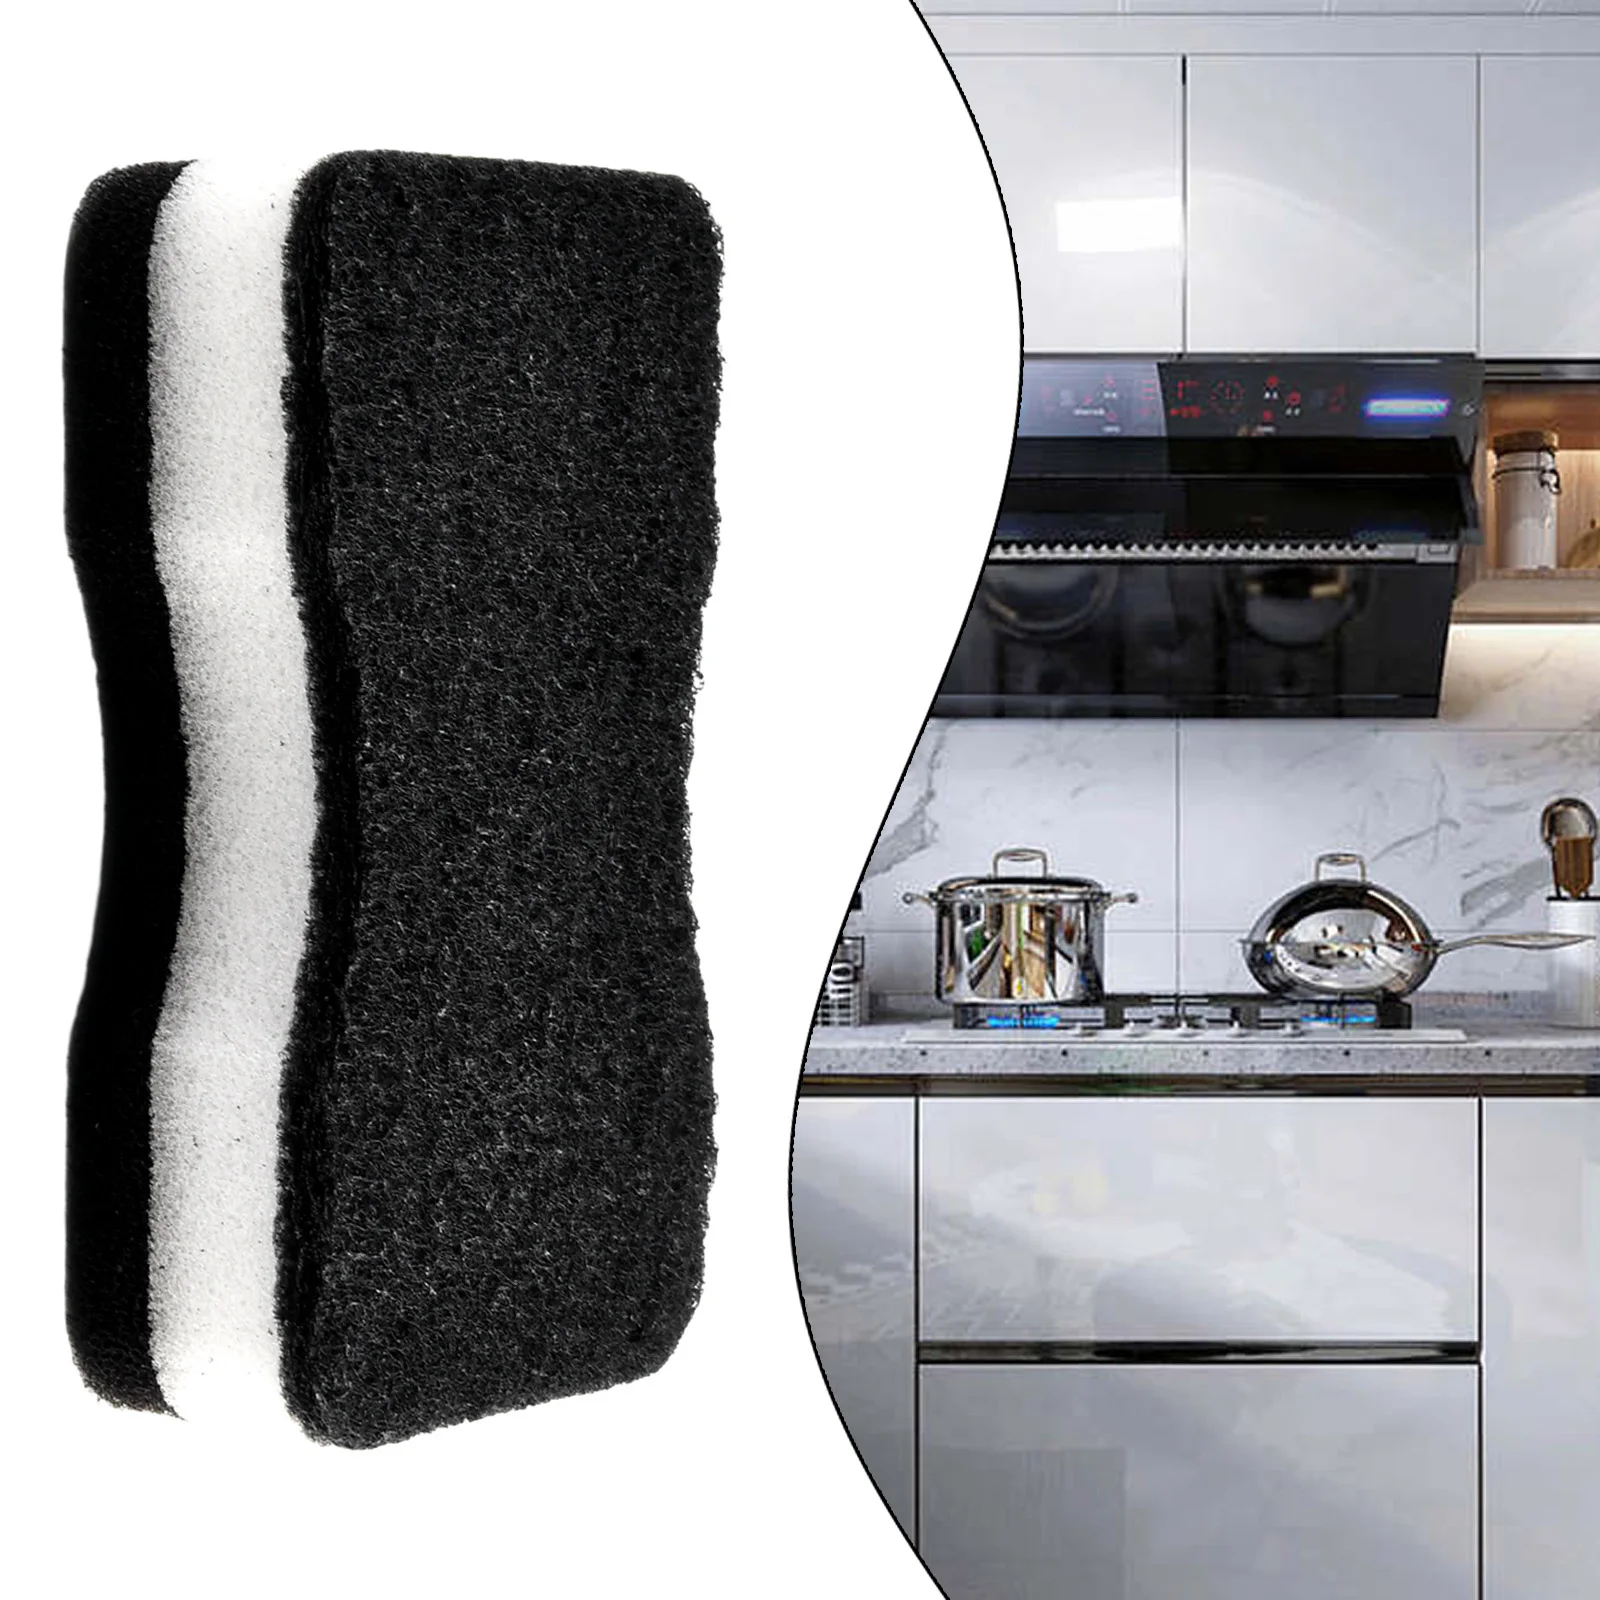 

5PCS Sponge Rub 11x6.5x3.5cm Black Dish Scouring Pad Kitchen Cleaning Grease Dirt Sponge Wiping Decontamination